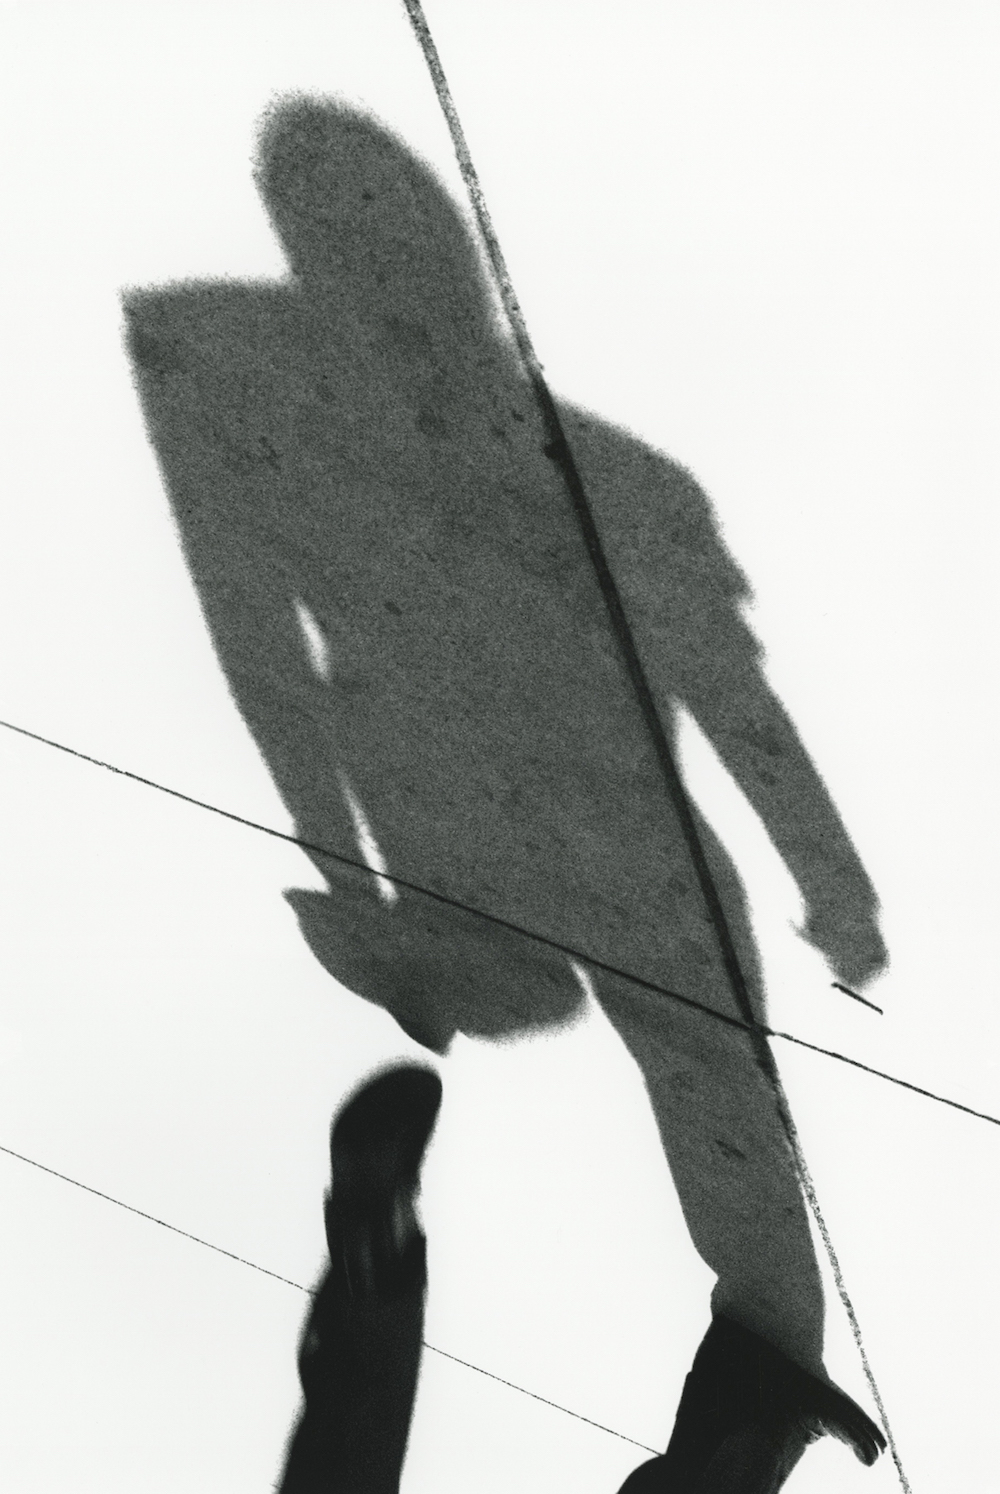 Feet, Shadow Series, Chicago, 1951